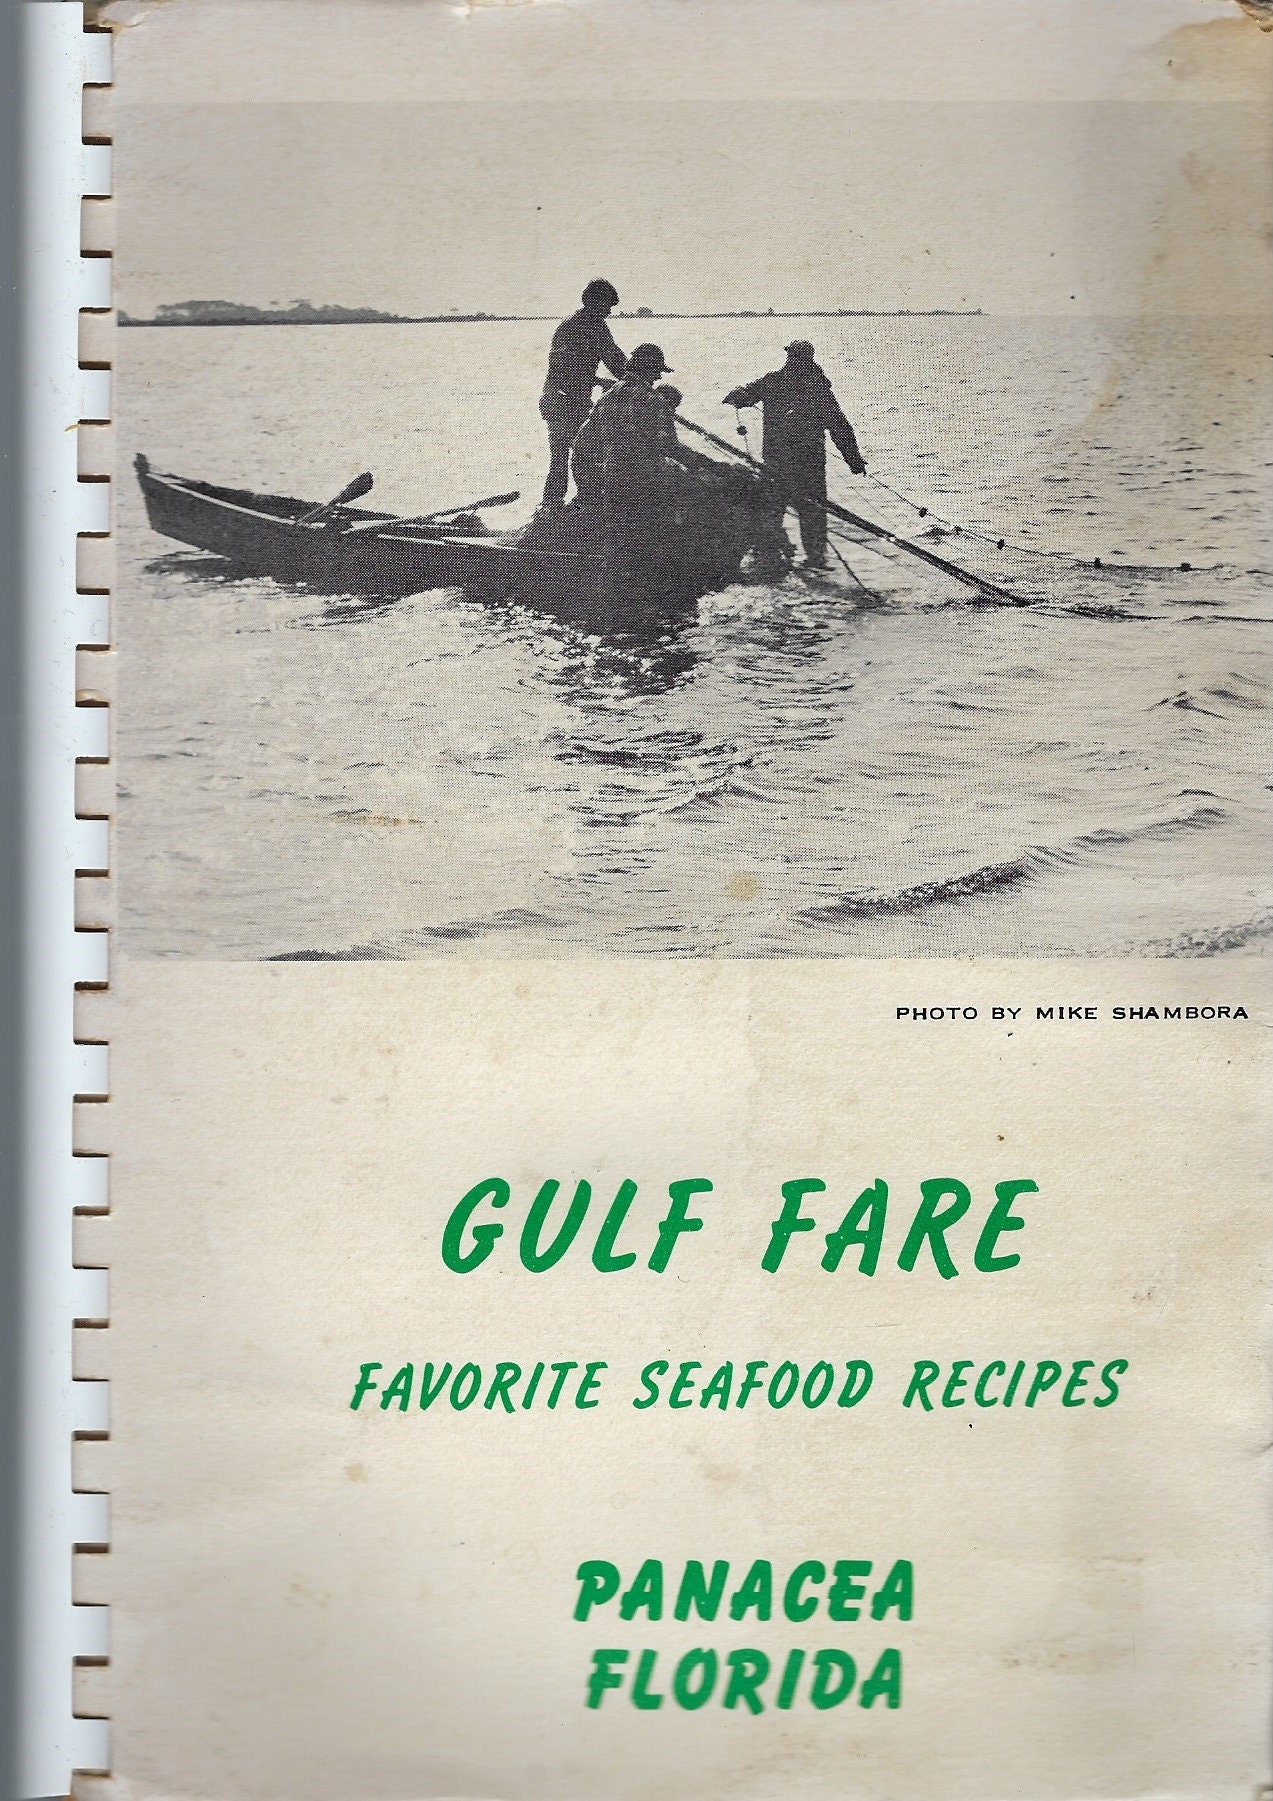 Panacea Florida 1987 Vintage Wakulla County Iris Garden Club Gulf Fare Cookbook Fl Favorite Seafood Recipes Collectible Souvenir Cook Book